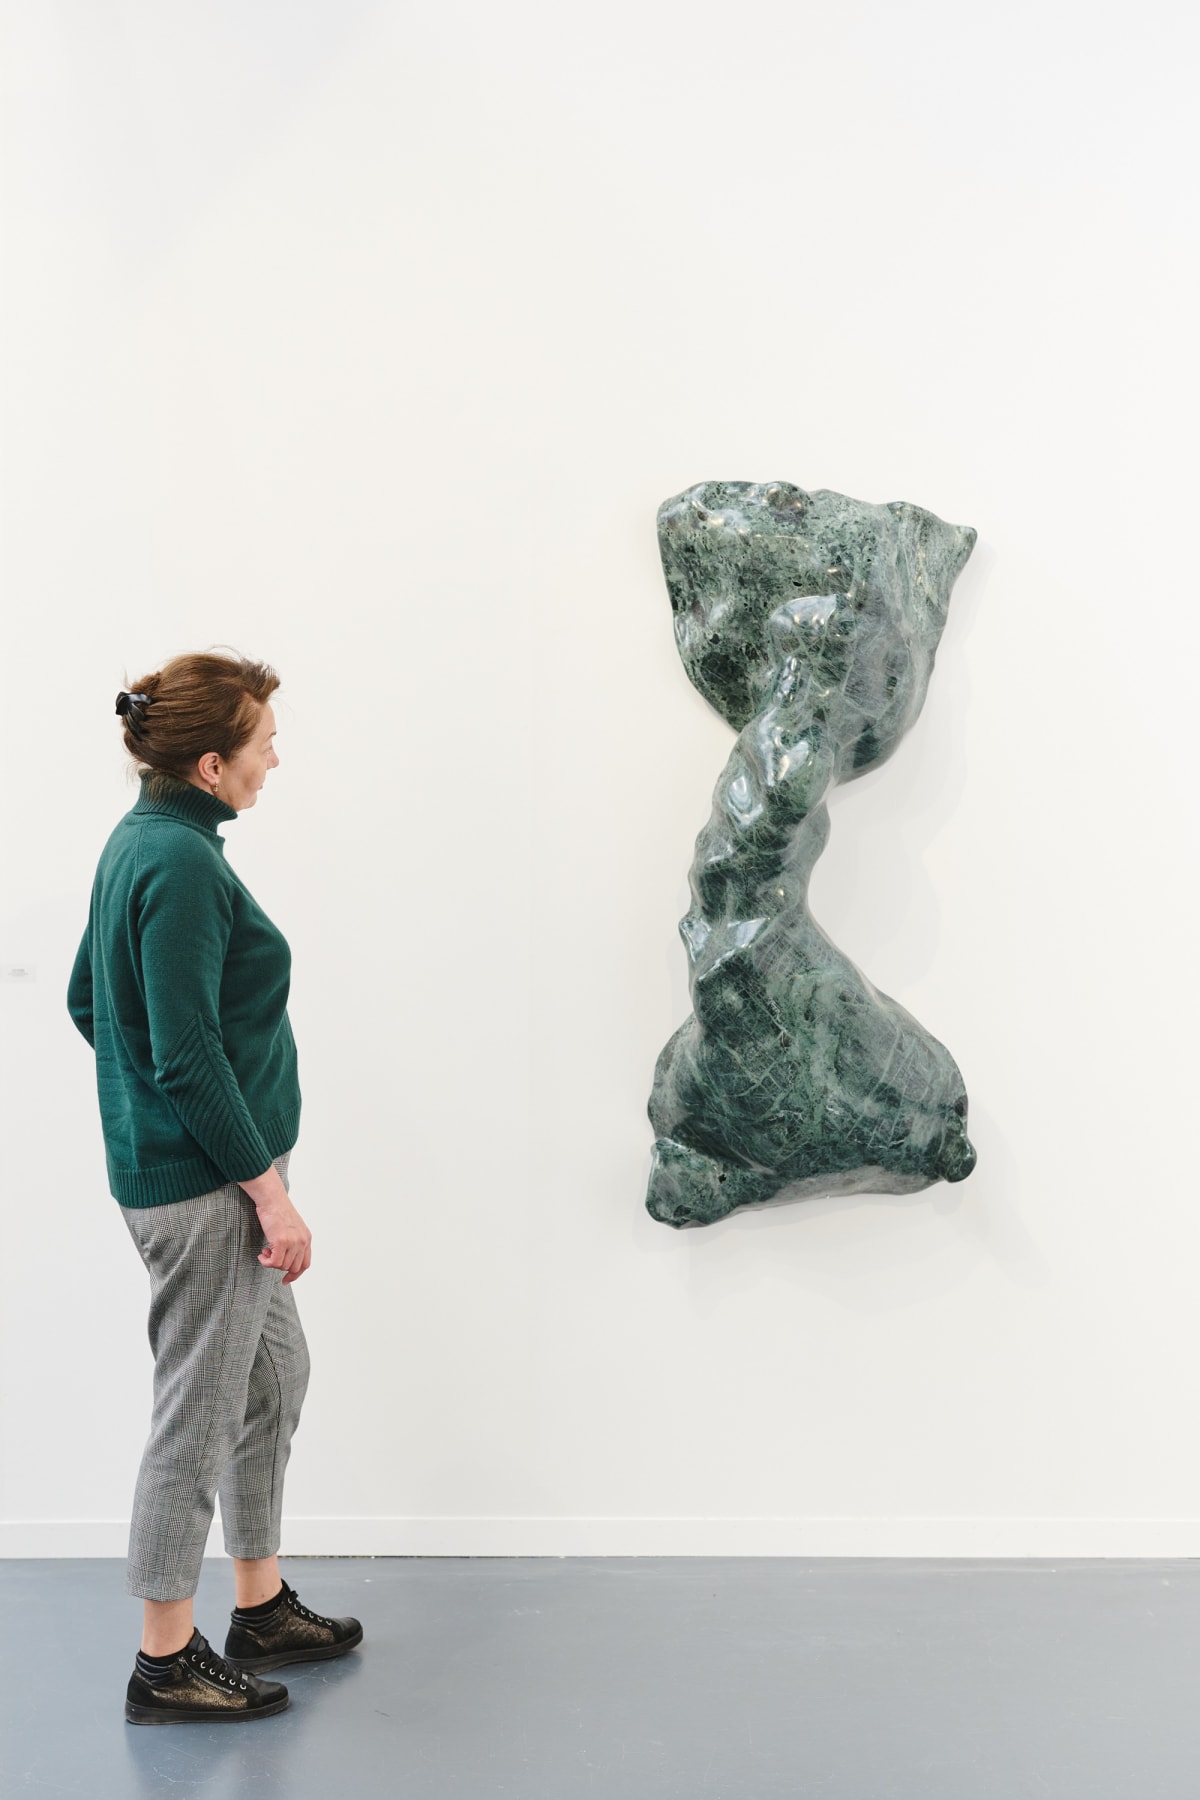 Lynda Benglis - Marble Sculptures